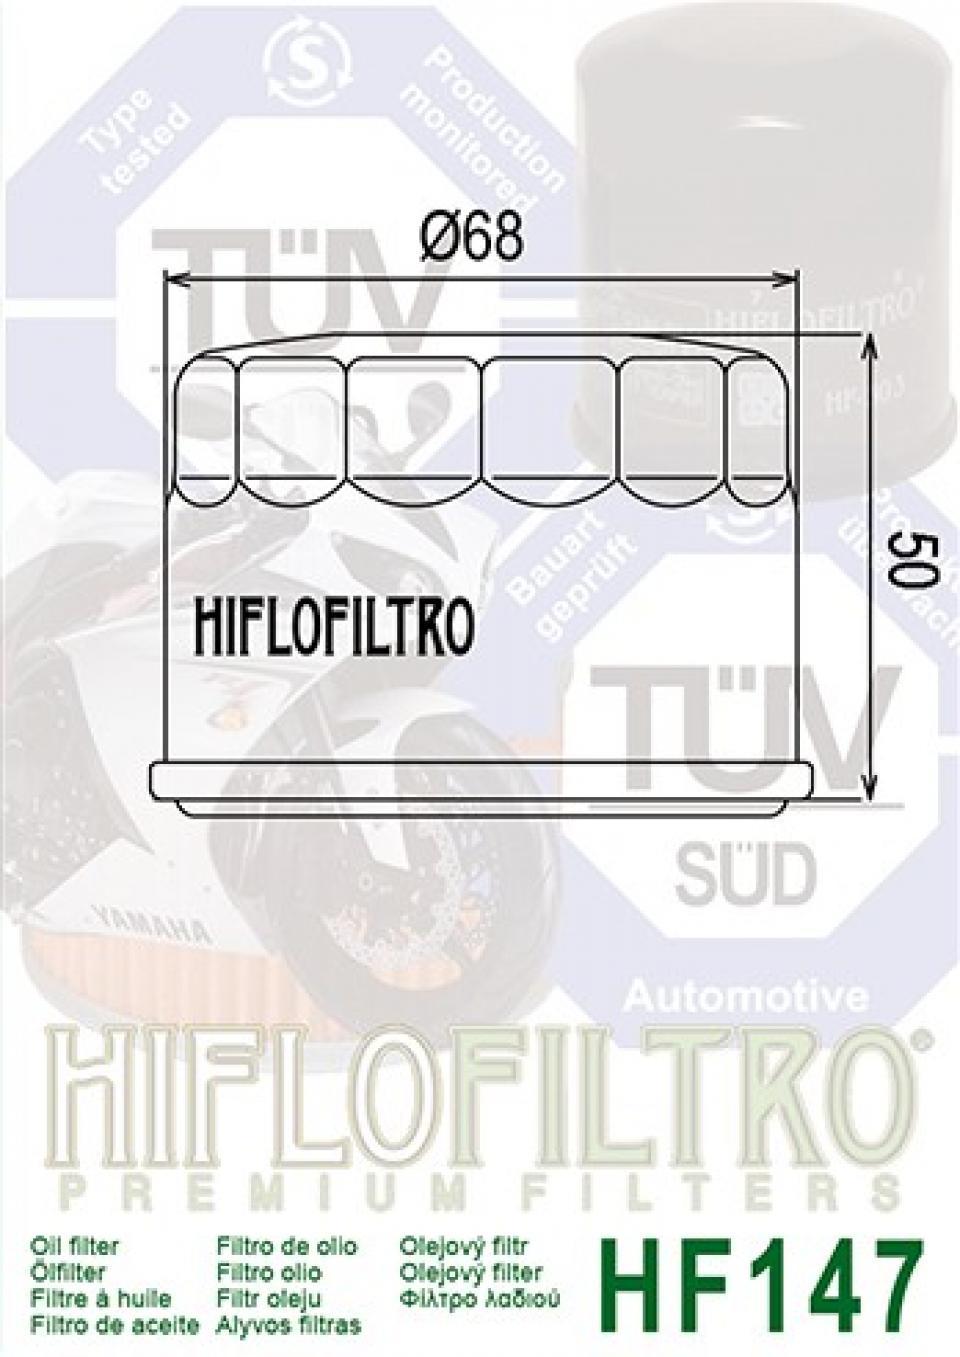 Filtre à huile Hiflofiltro pour Quad Yamaha 660 Raptor 2001 à 2005 HF147 / B16-E3440-00 Neuf